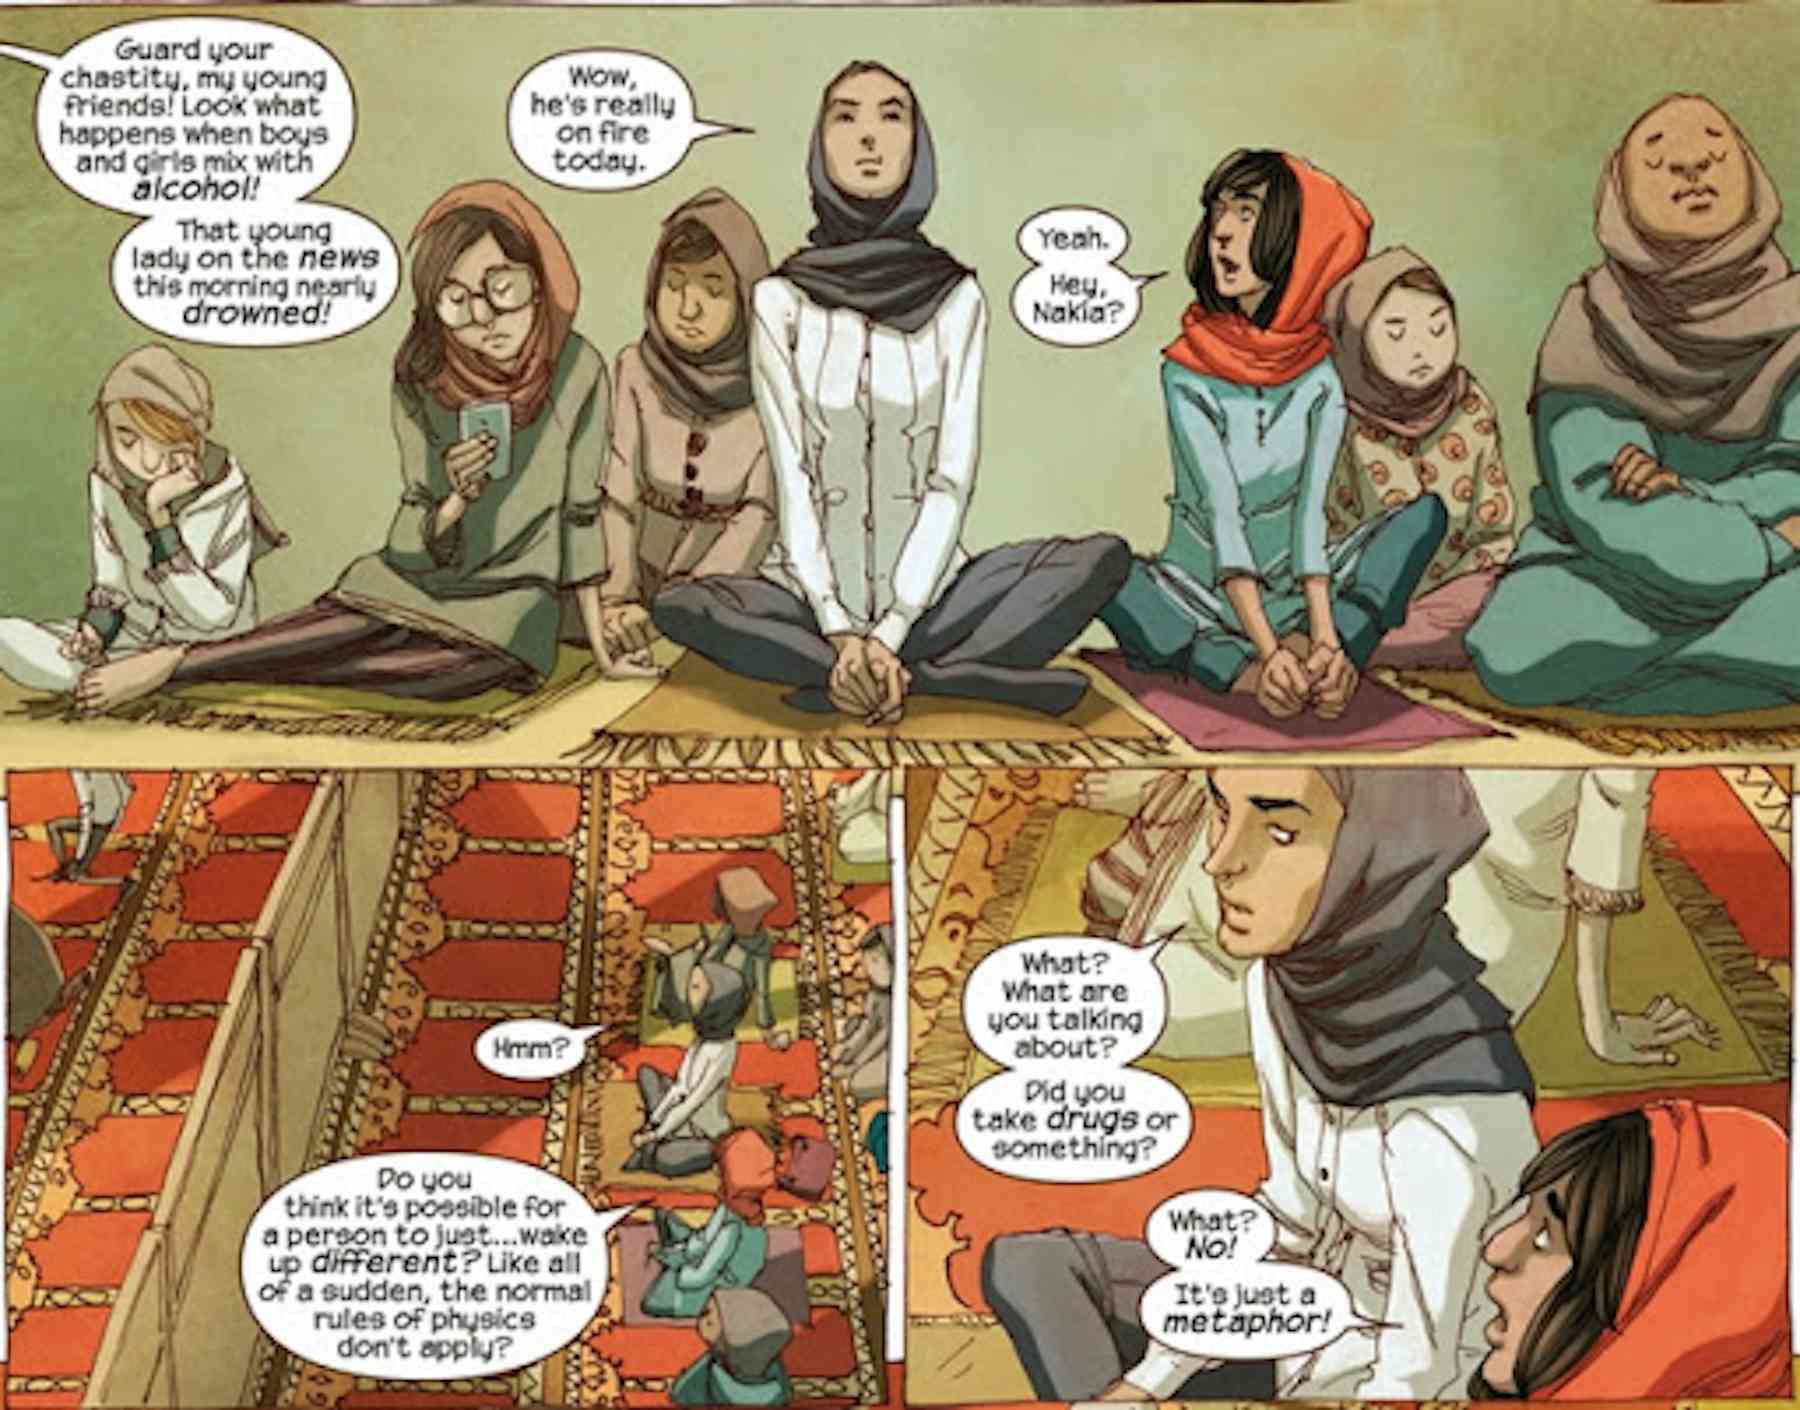 Marvel S First On Screen Muslim Superhero — Kamala Khan Ms Marvel S Alter Ego — Inspires Big Hopes